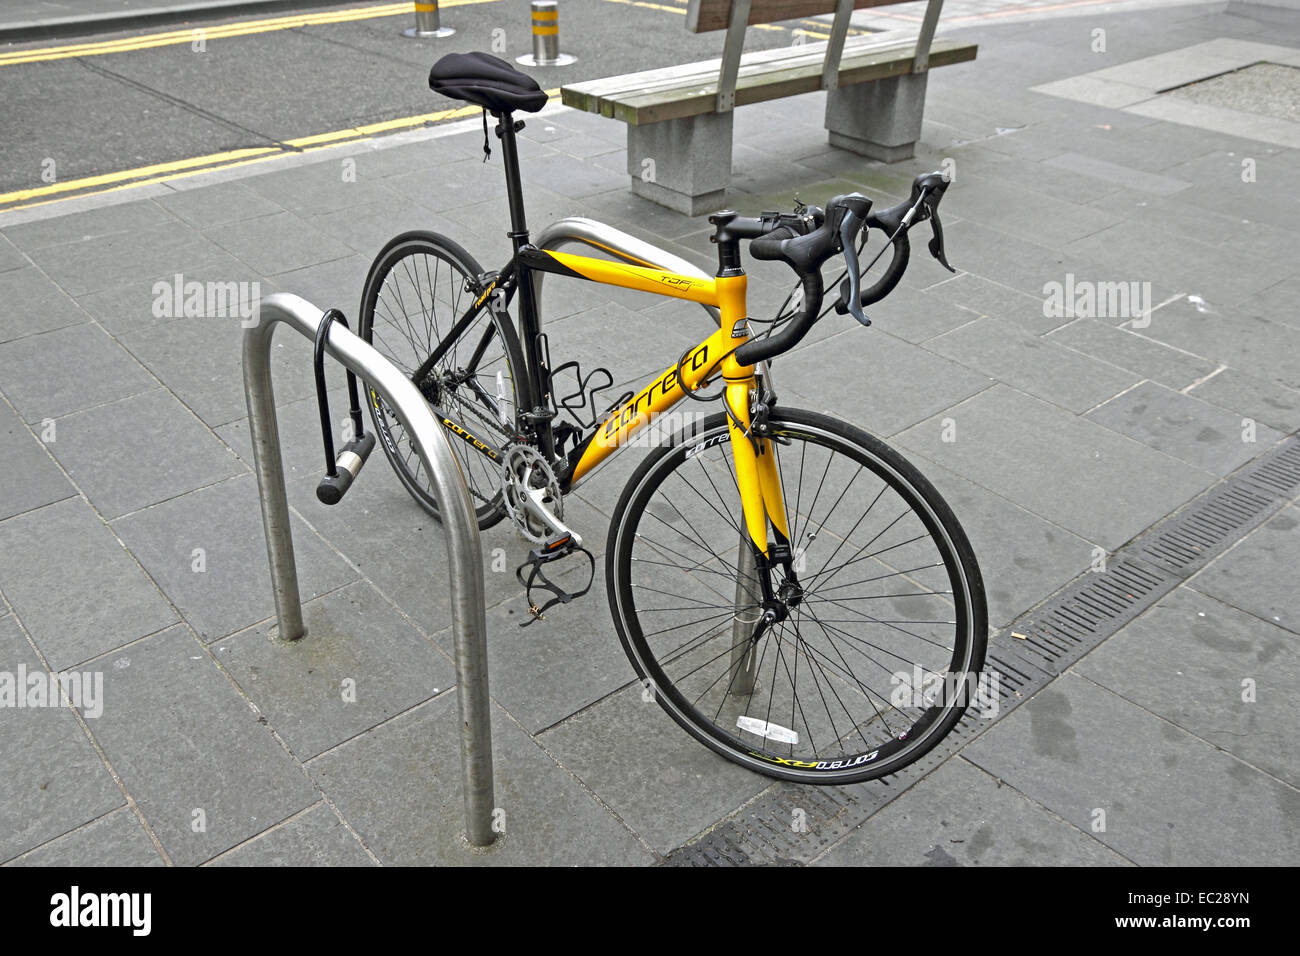 Yellow, Carrera racing bicycle locked to security hoop. Stock Photo